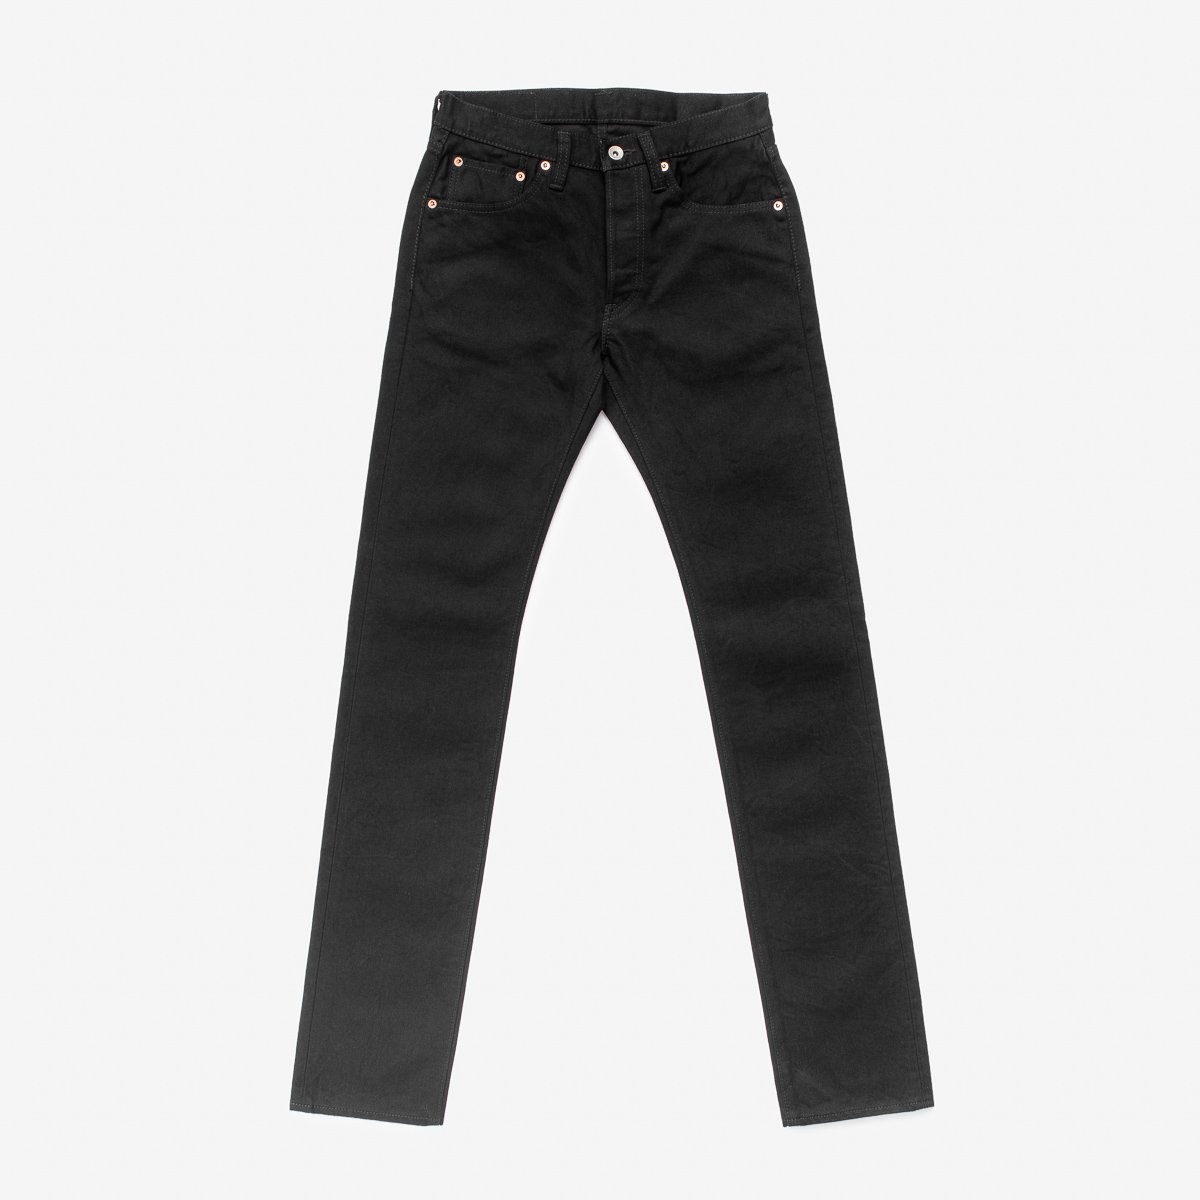 IH-777S-142bb 14oz Selvedge Denim Slim Tapered Cut Jeans - Black/Black - 1